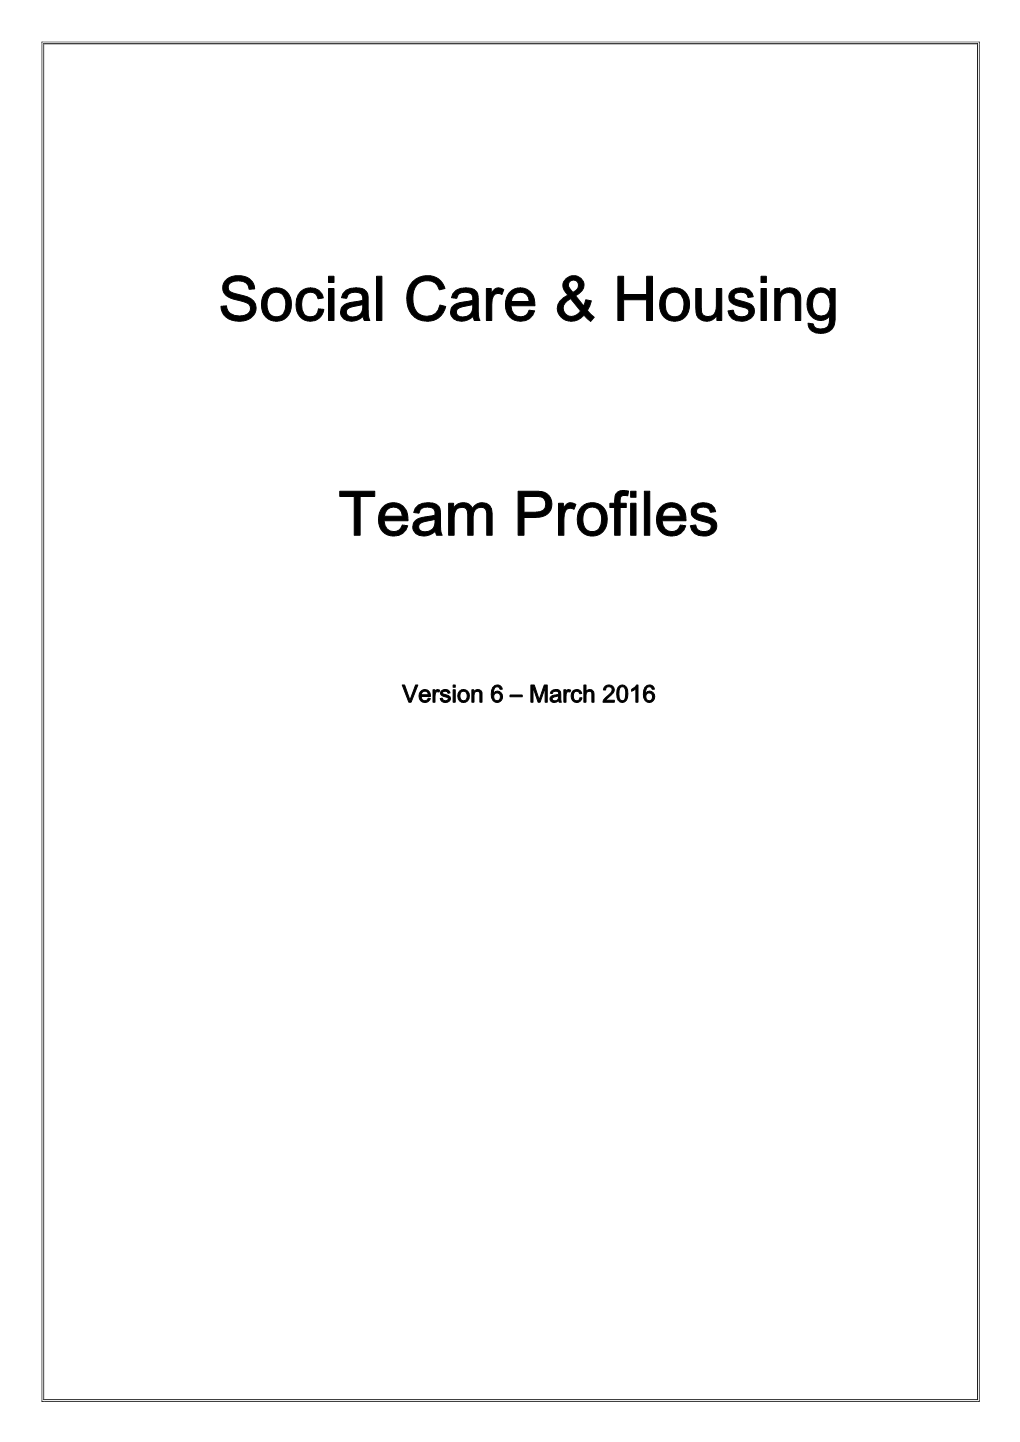 Social Care & Housing Team Profiles